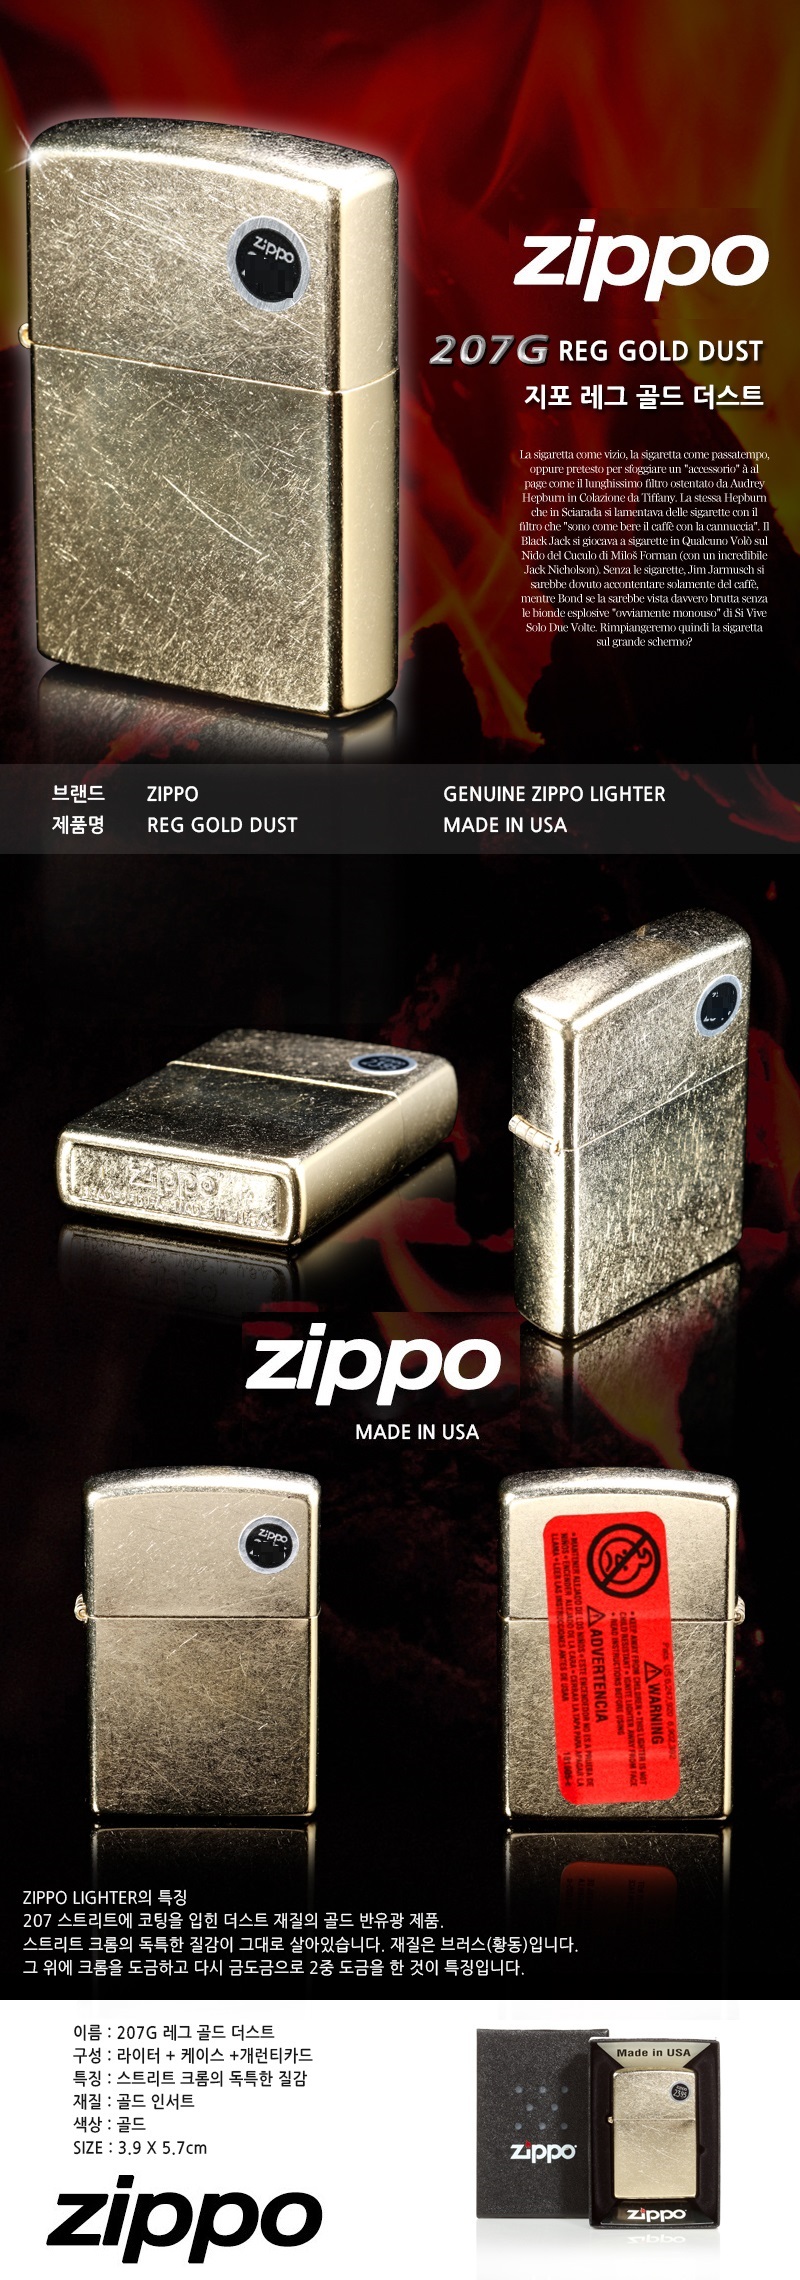 South Korea Version Zippo 207G Reg Gold Dust Lighter Made in USA